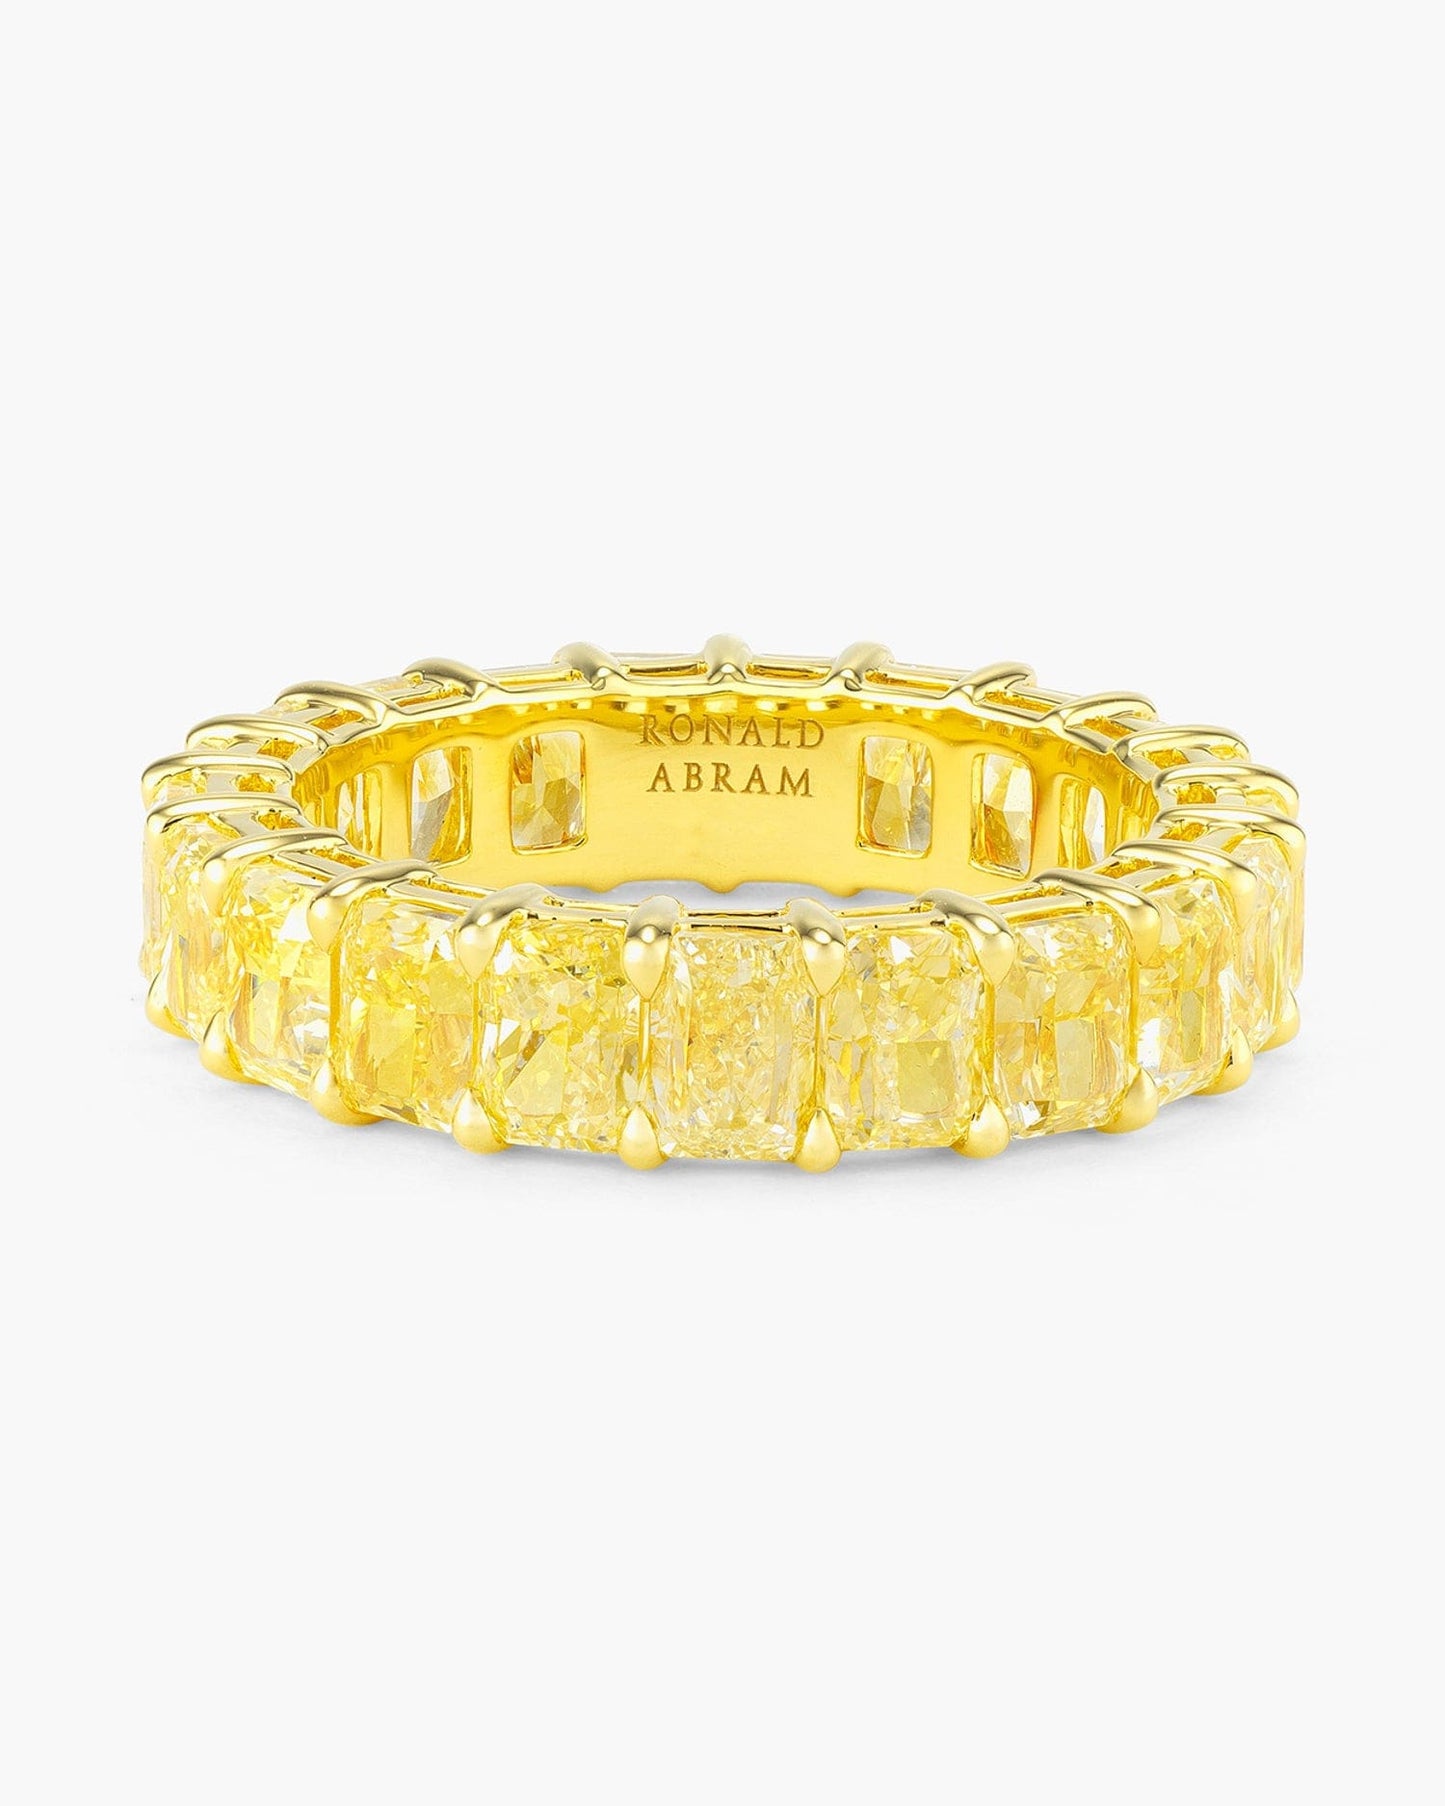 Radiant Cut Fancy Yellow Diamond Eternity Ring (0.30 carat)